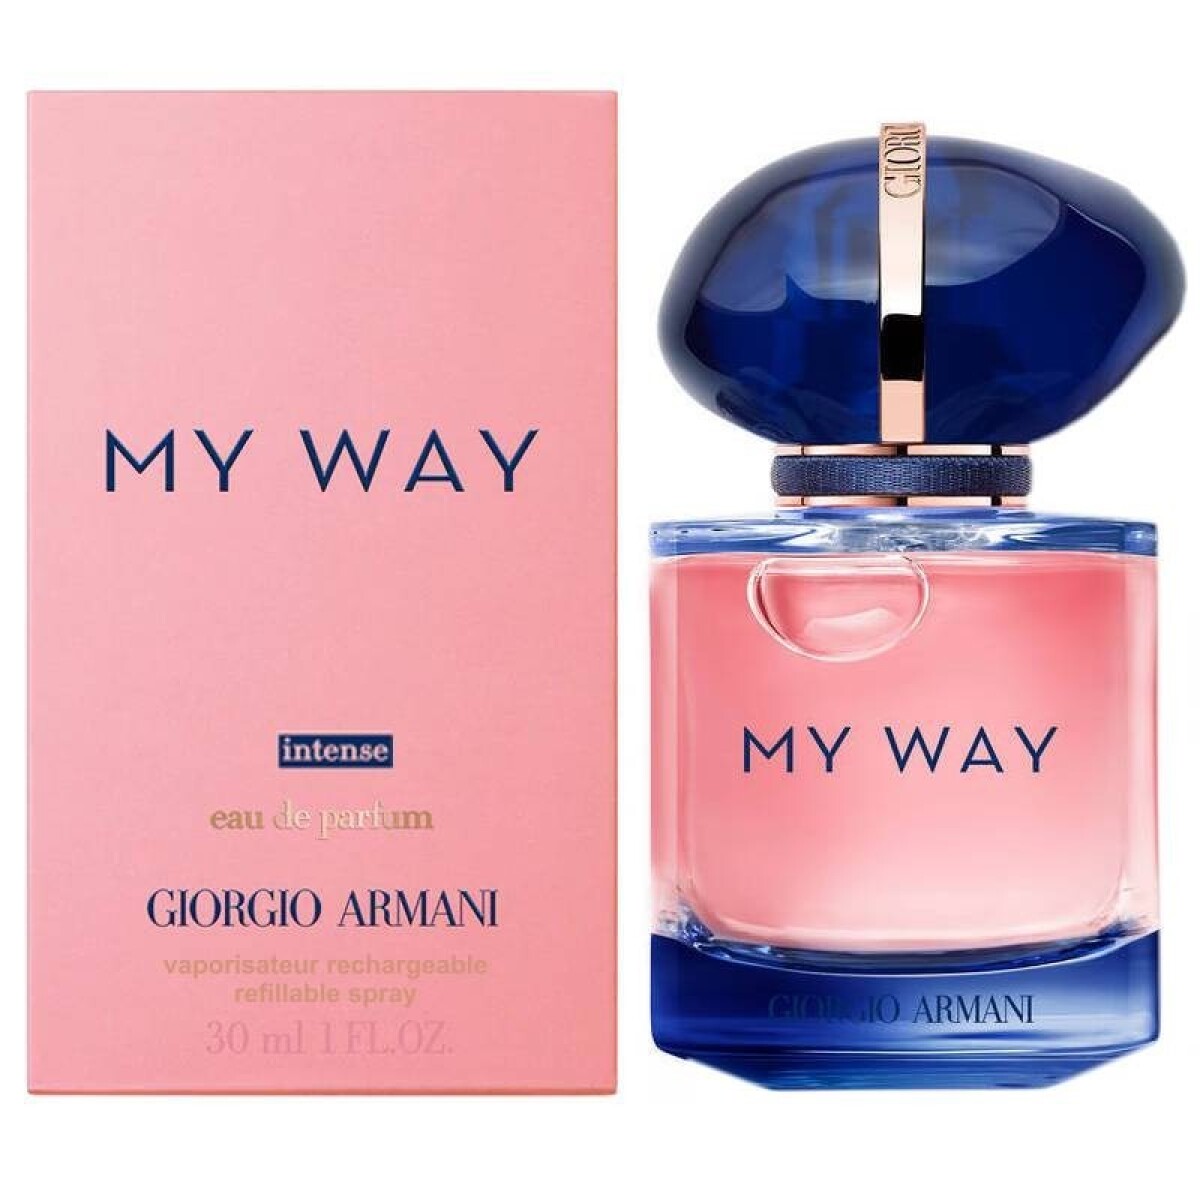 Perfume My Way Intense Edp Giorgio Armani 30 Ml. 